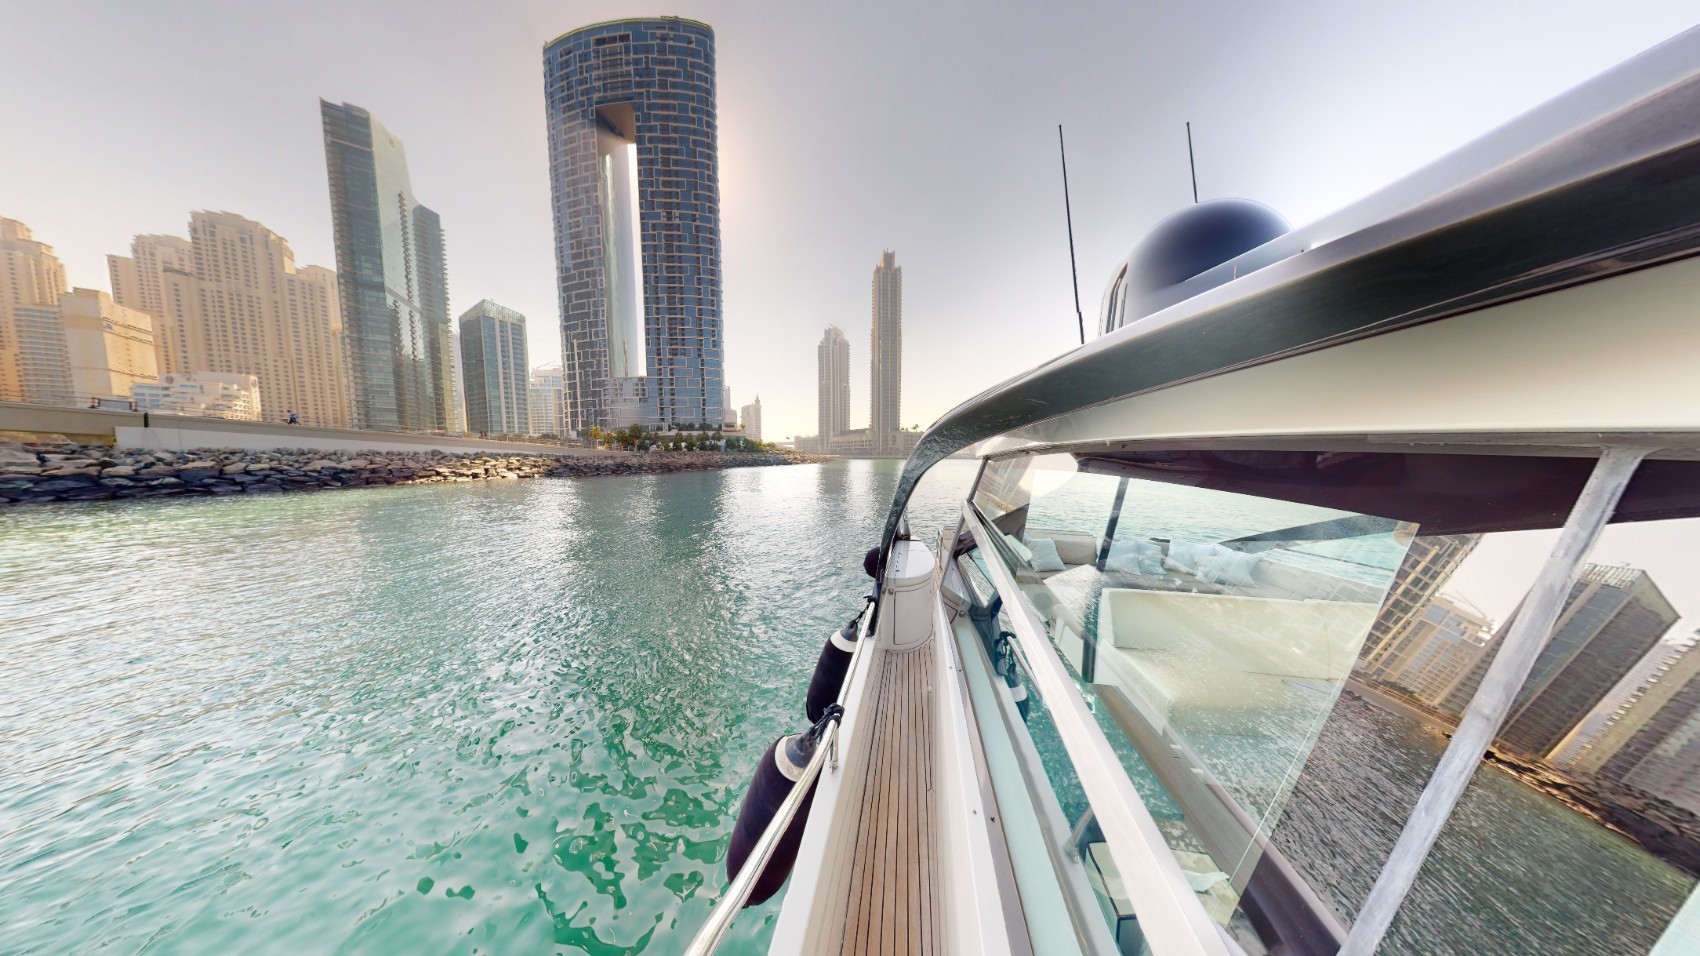 Pershing 5X Pearl White 52 pie en Dubai Harbour para alquiler en Dubai